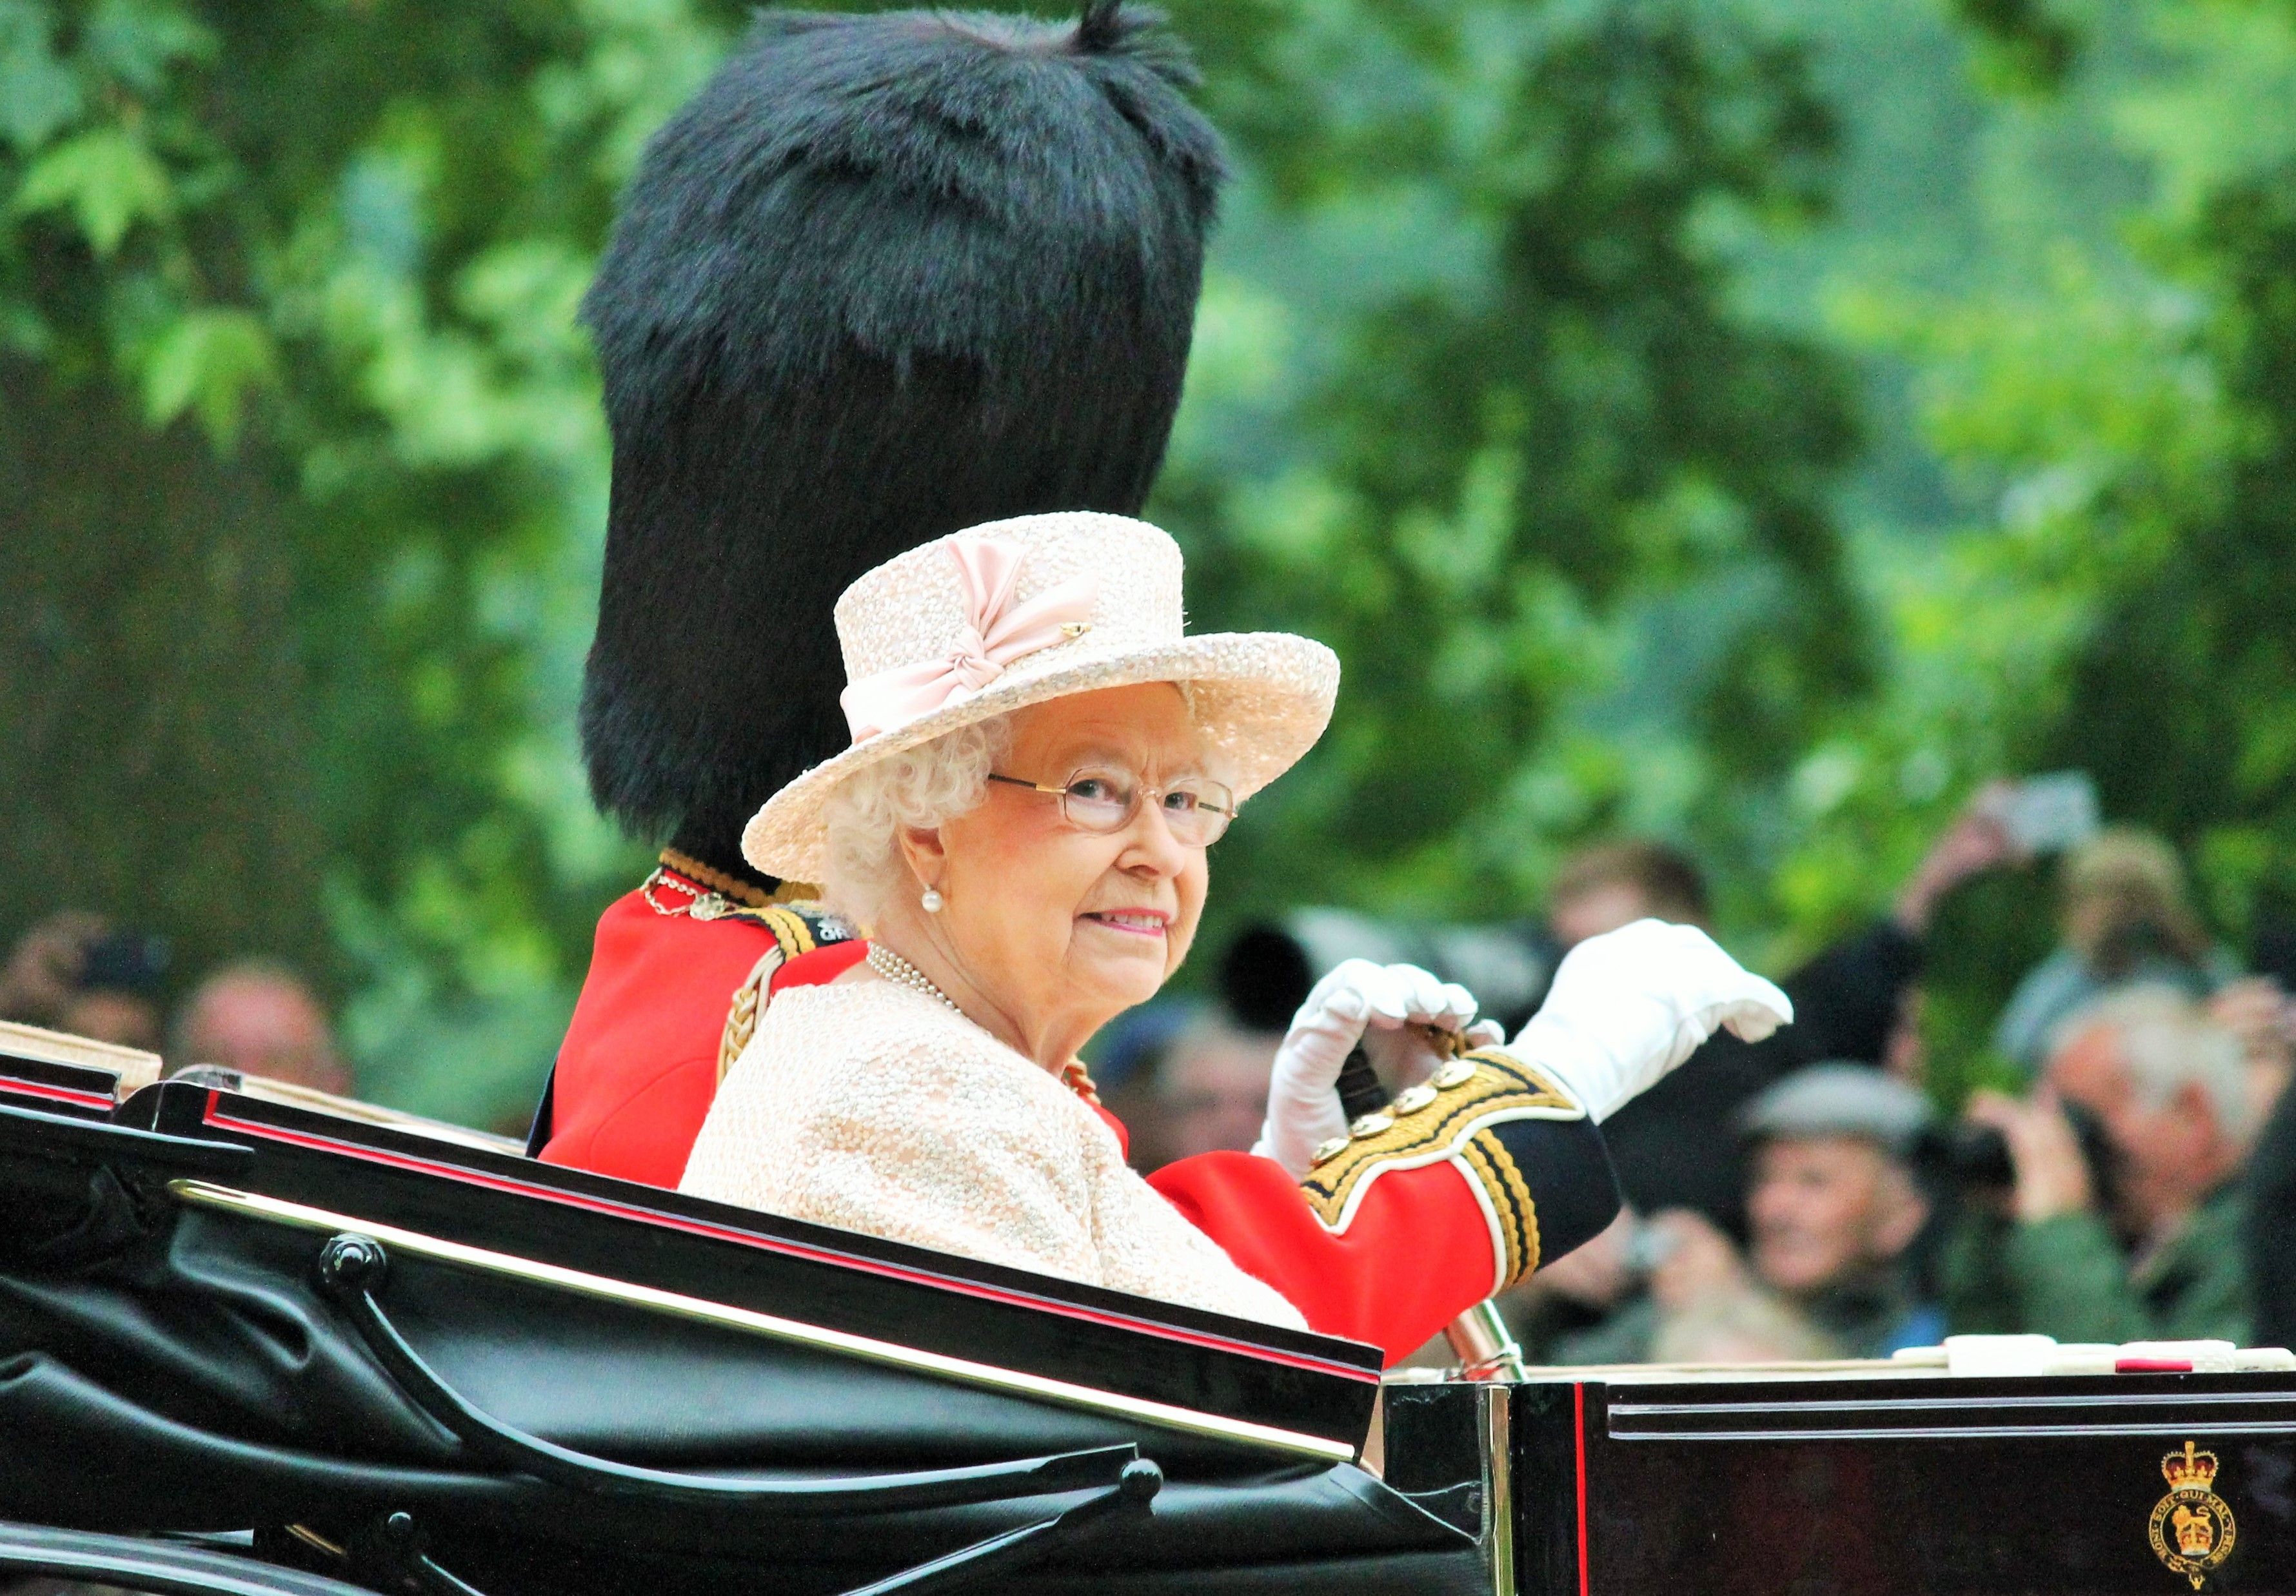 La divertida anécdota de cómo una nieta de Isabel II se enteró de que su abuela era también la reina